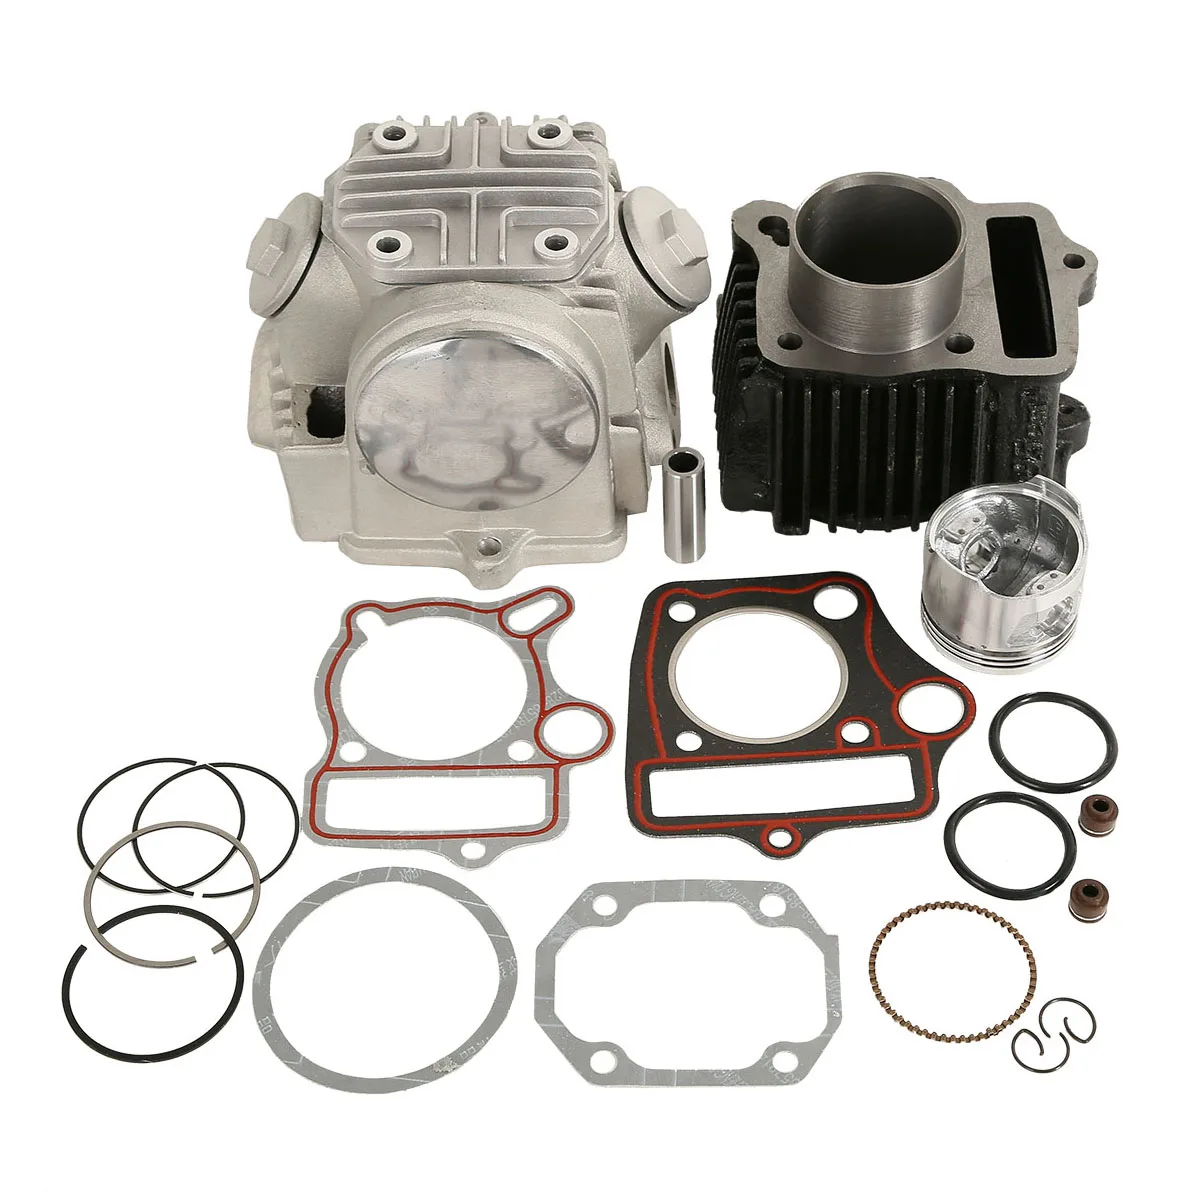 Motorcycle Cylinder Engine Motor Rebuild For Honda ATC70 CT70 TRX70 CRF70 XR70 70CC 72CM3